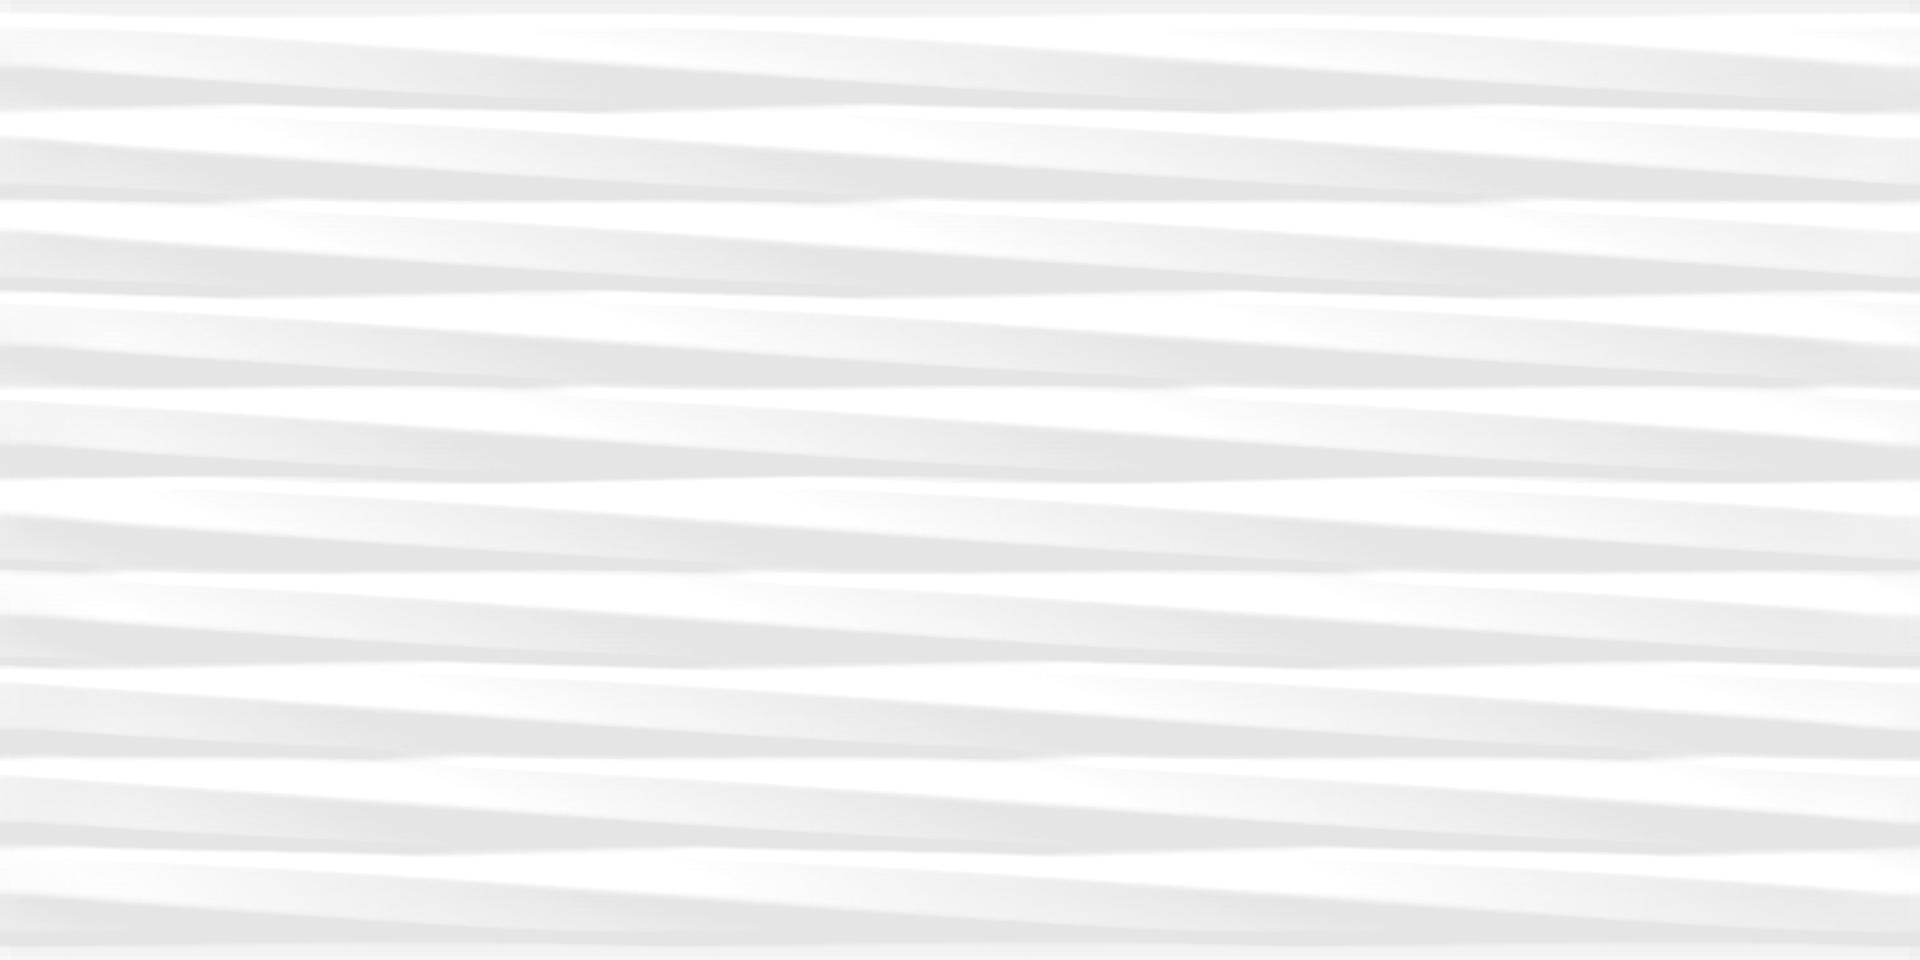 faience-argenta-baikal-30x60-1-44m2-paq-lined-blanco-brillo-1